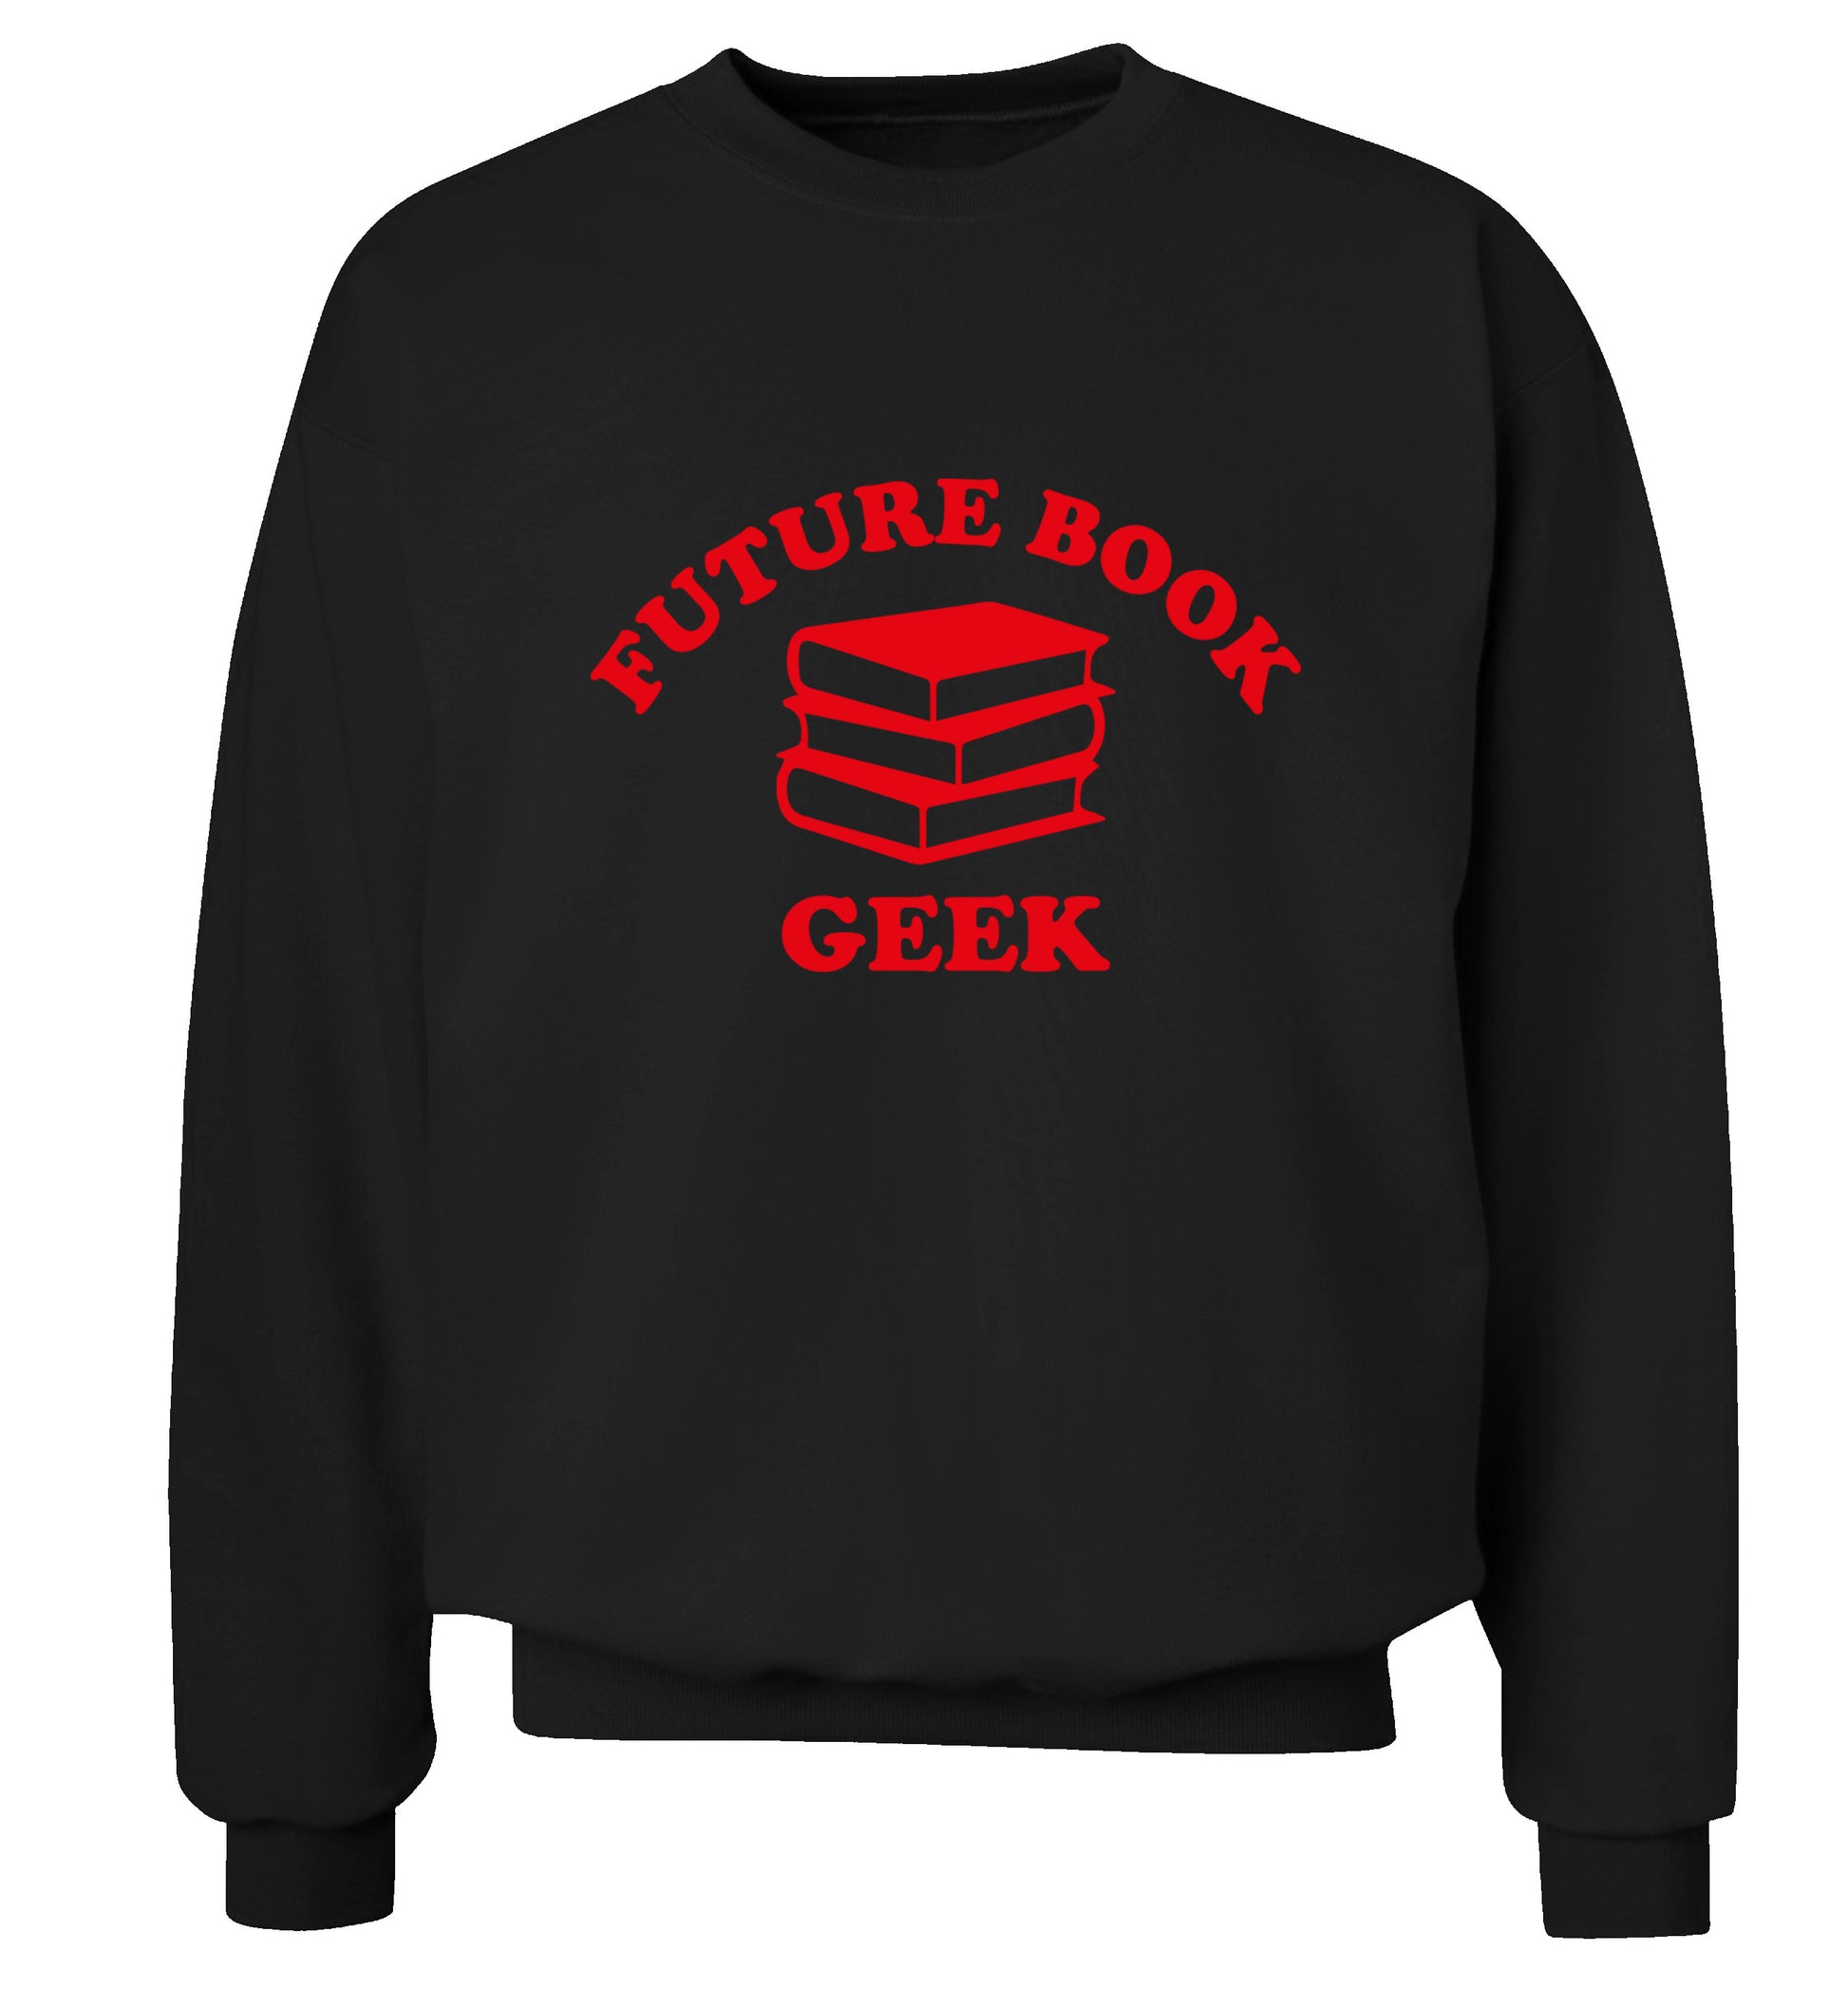 Future book geek Adult's unisex black Sweater 2XL